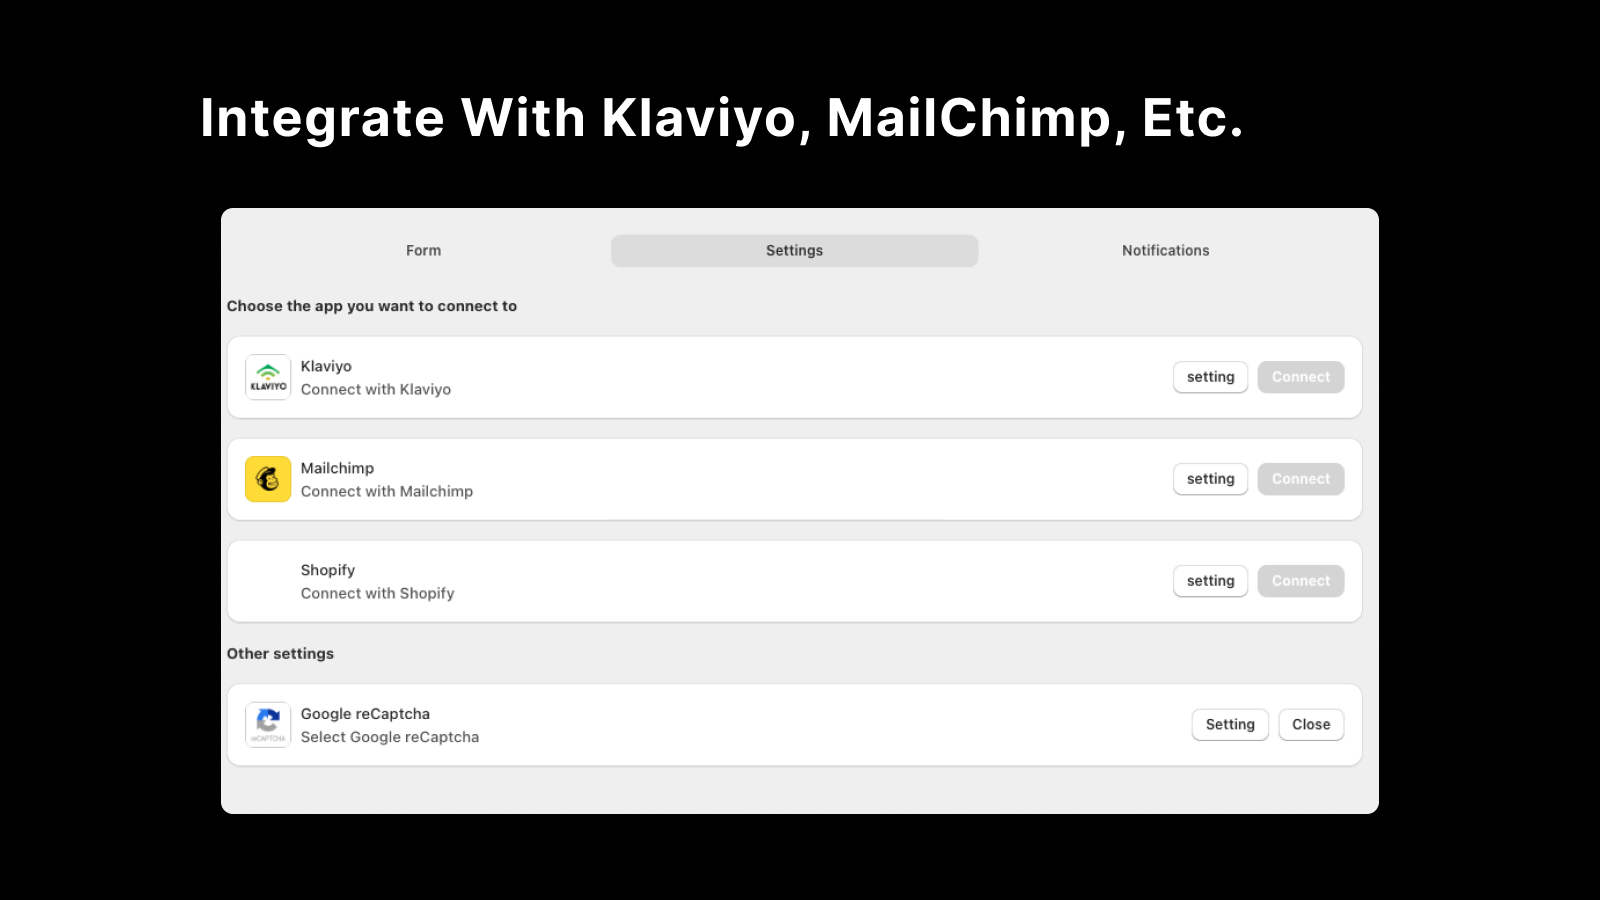 Integre com Klaviyo, MailChimp, Etc.